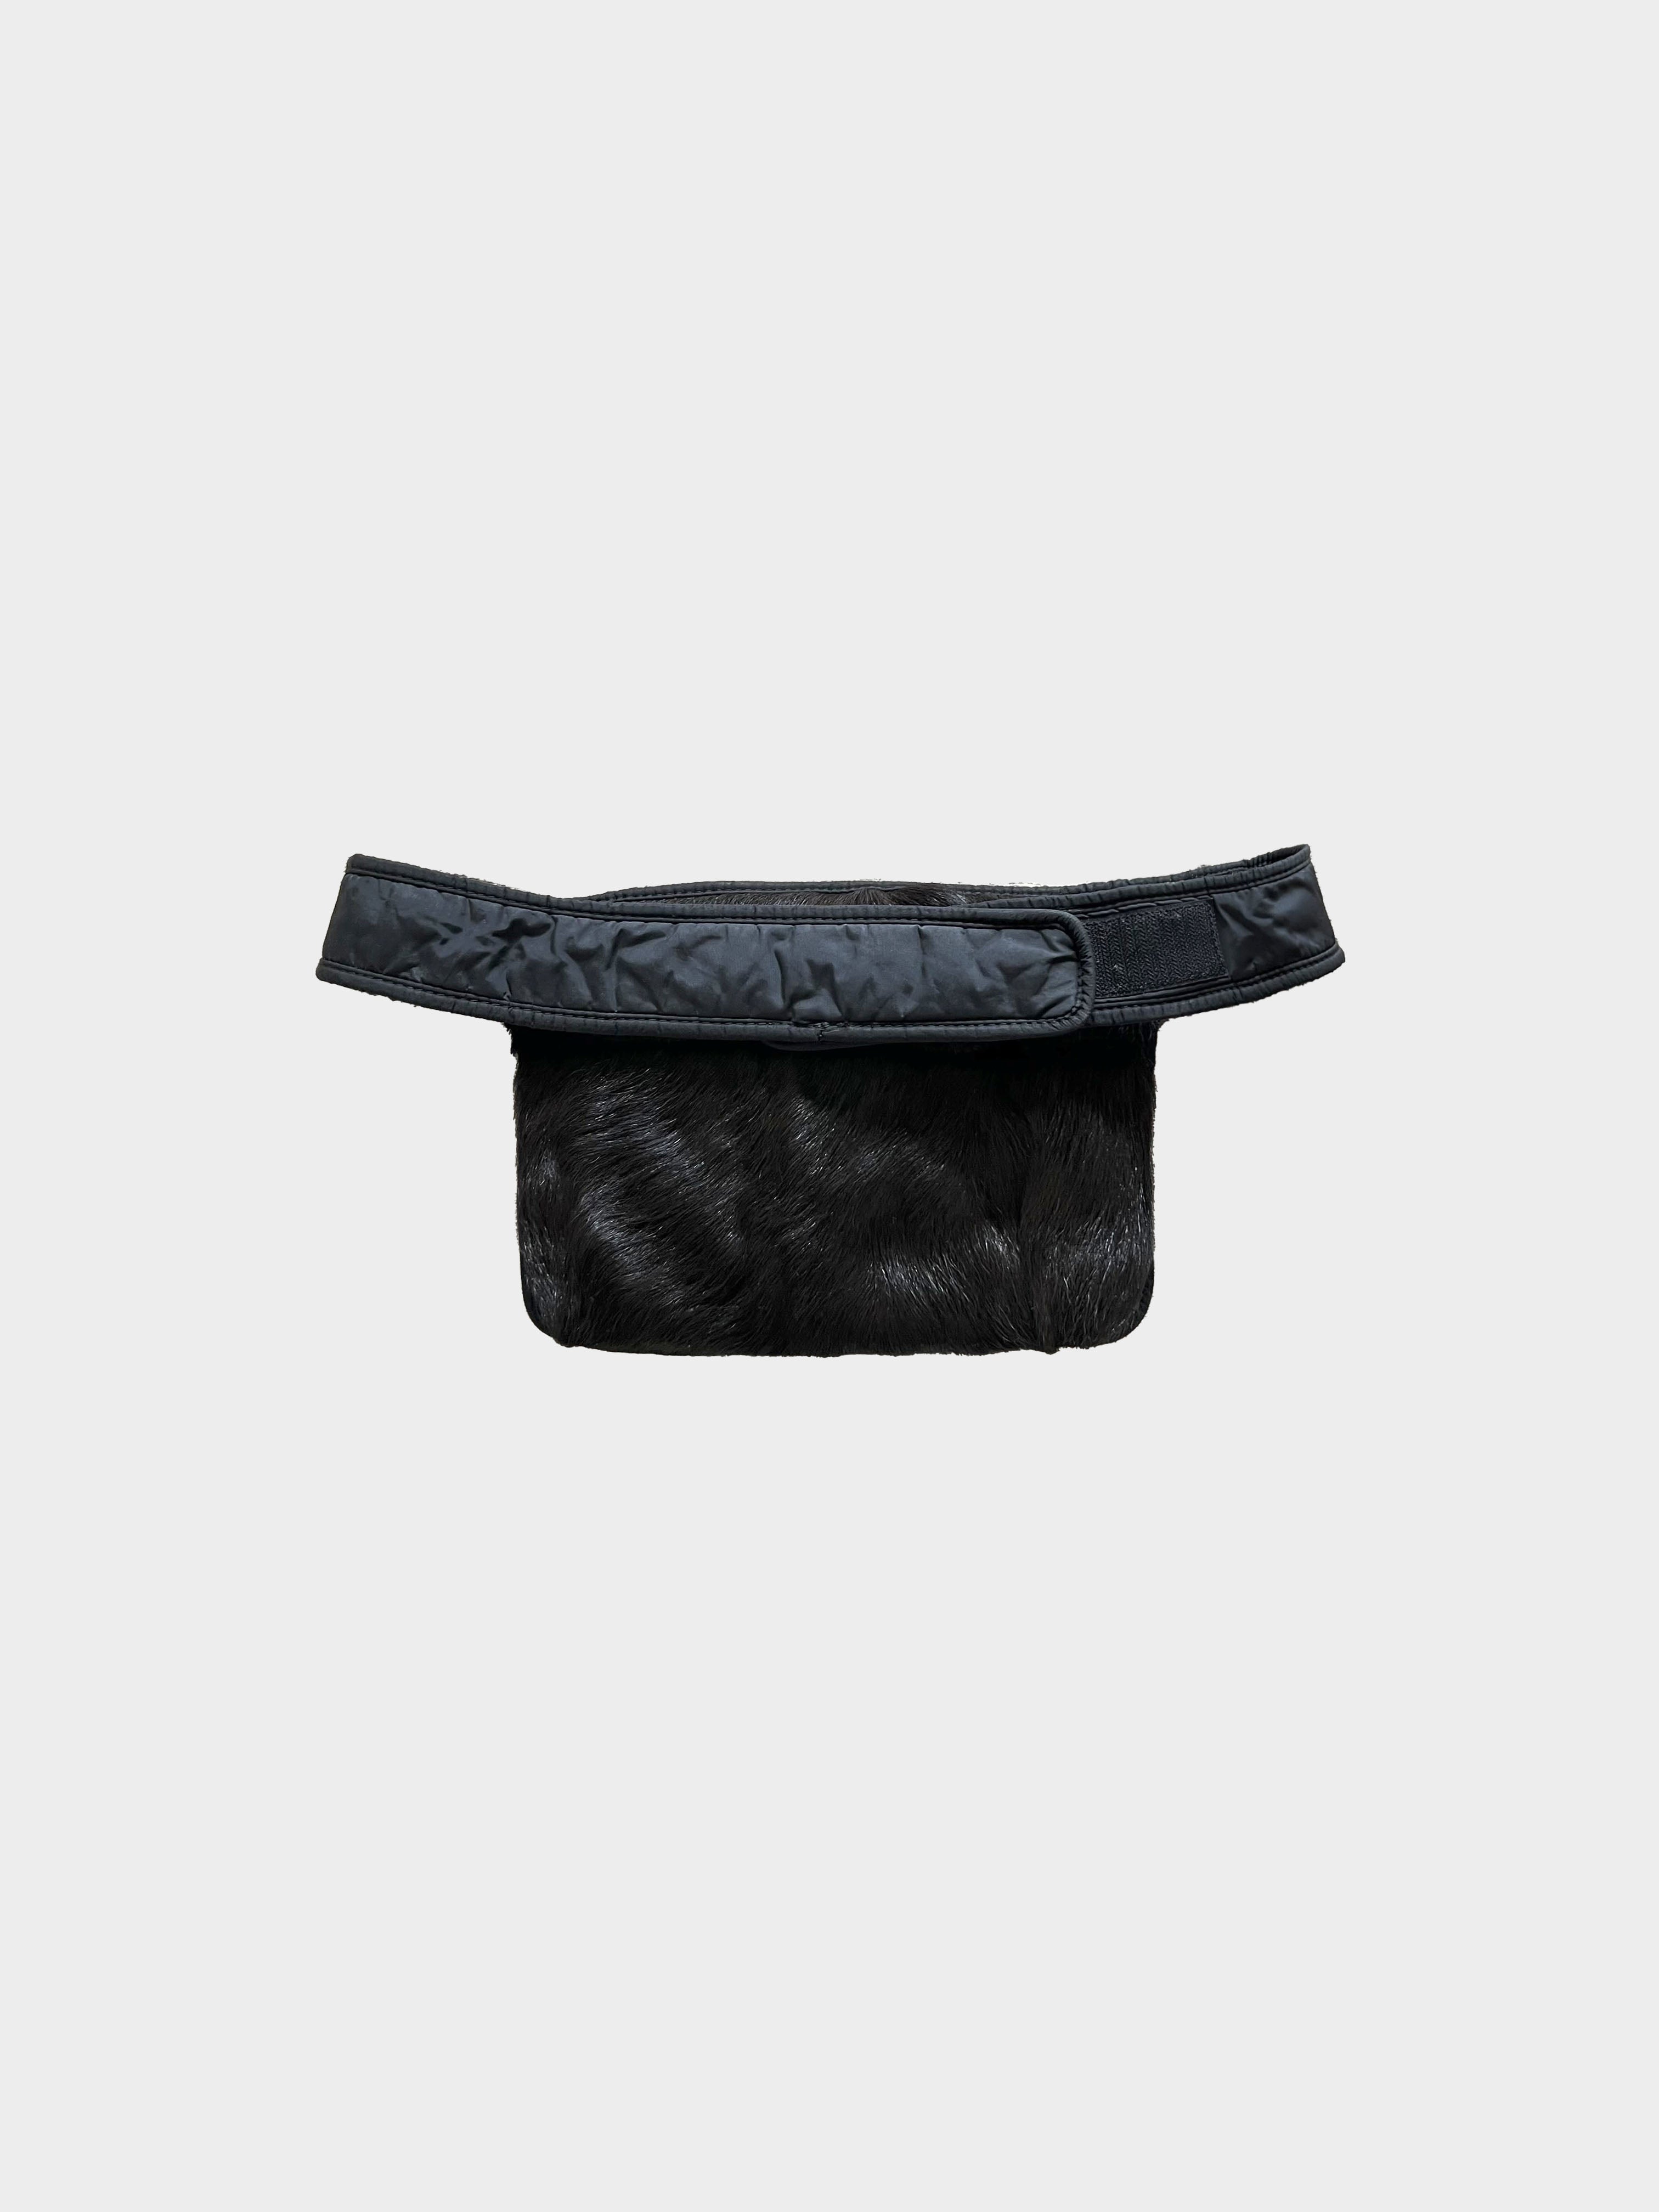 Prada SS 1999 Fur Belt Bag